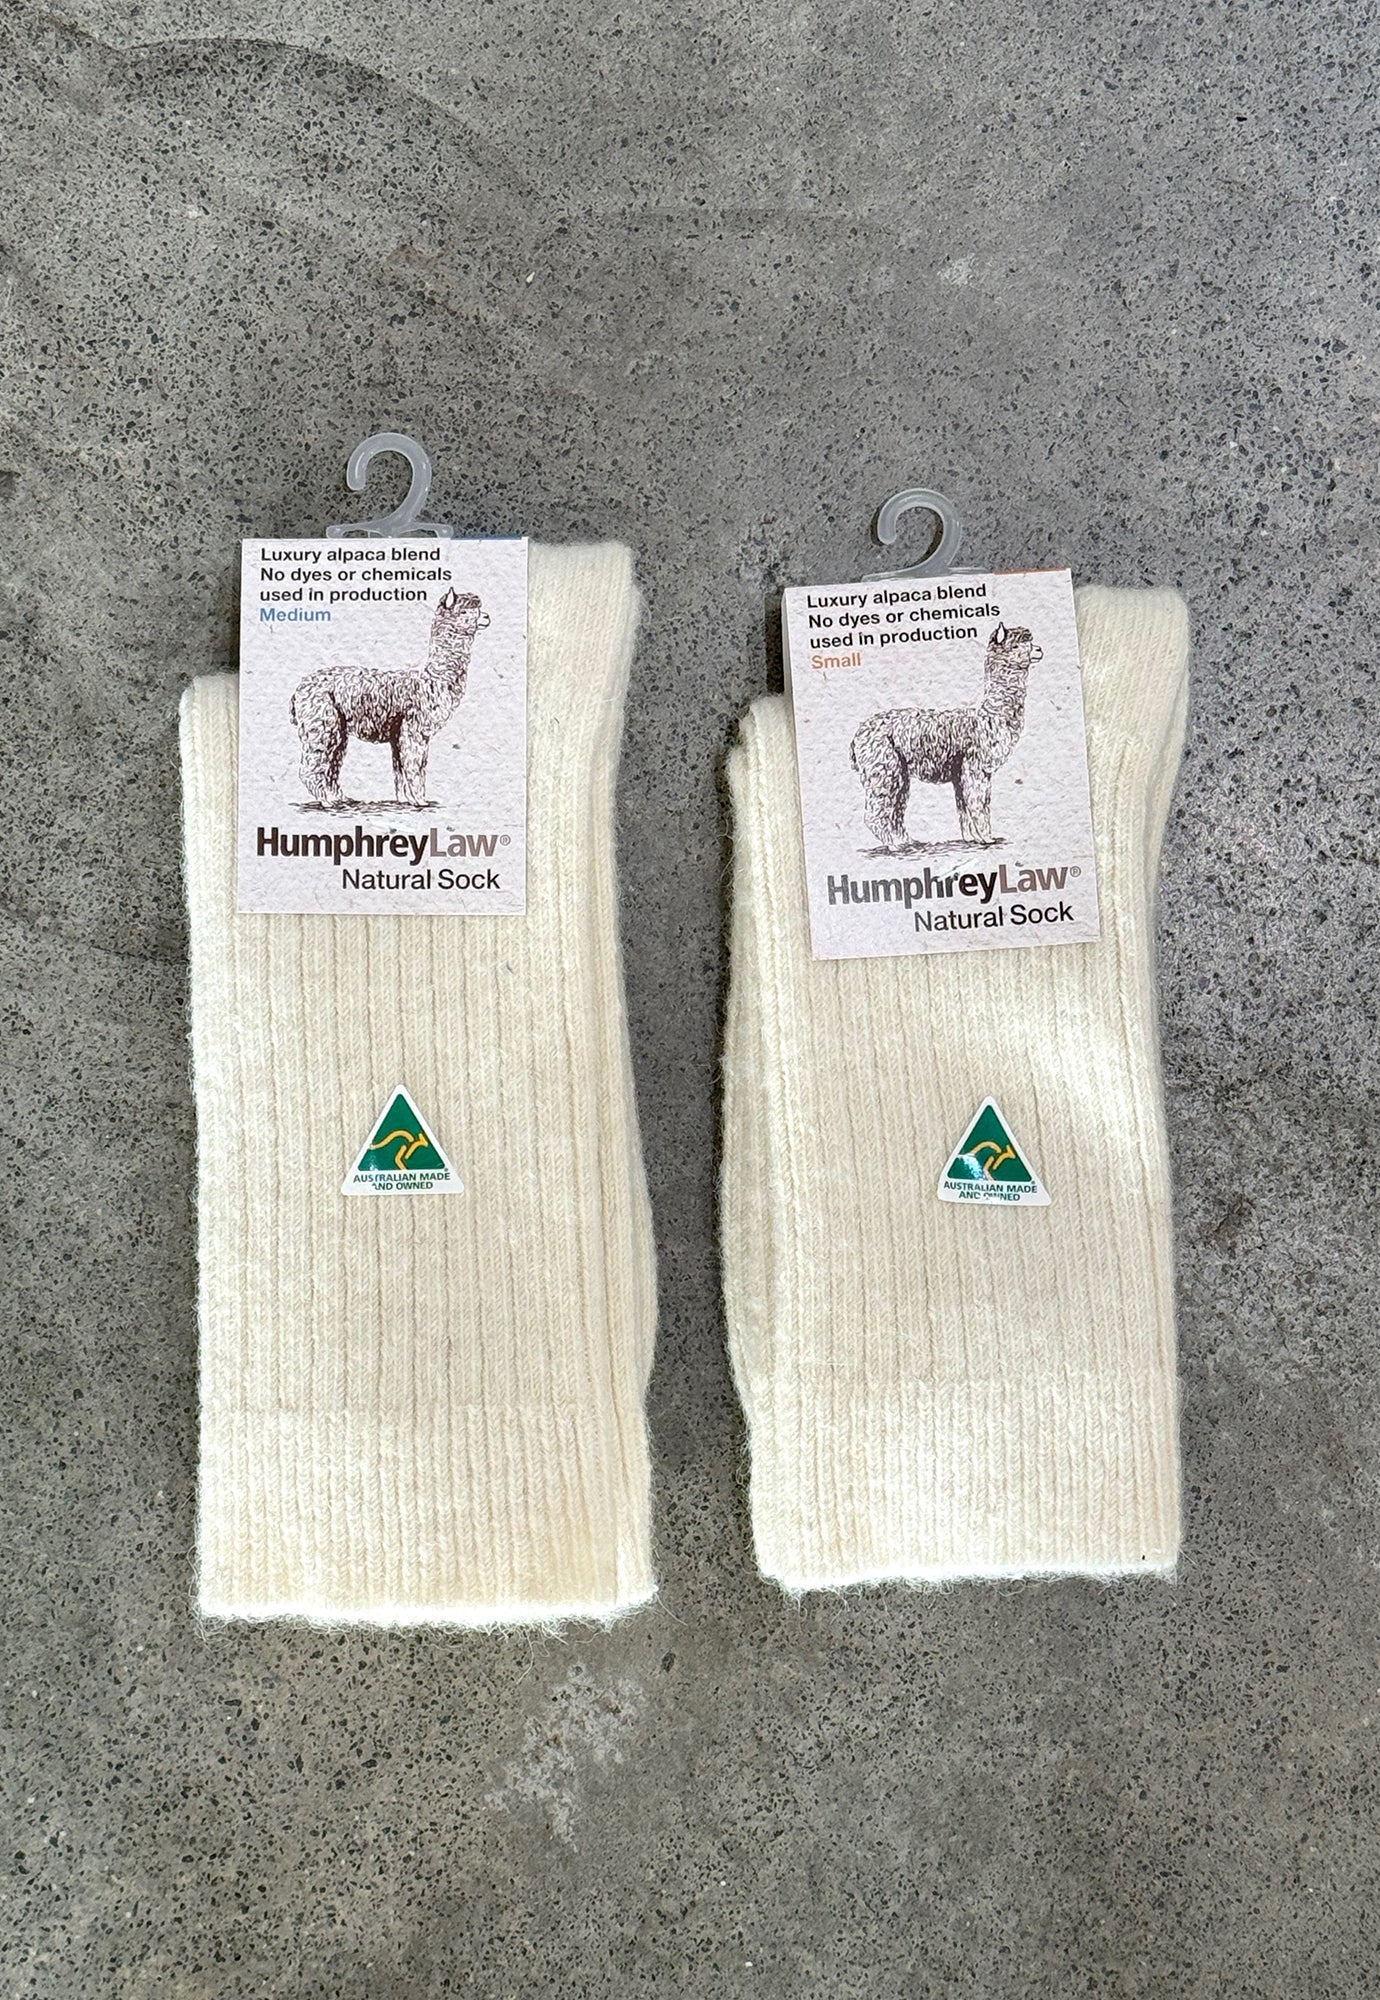 humphrey law alpaca wool blend sock